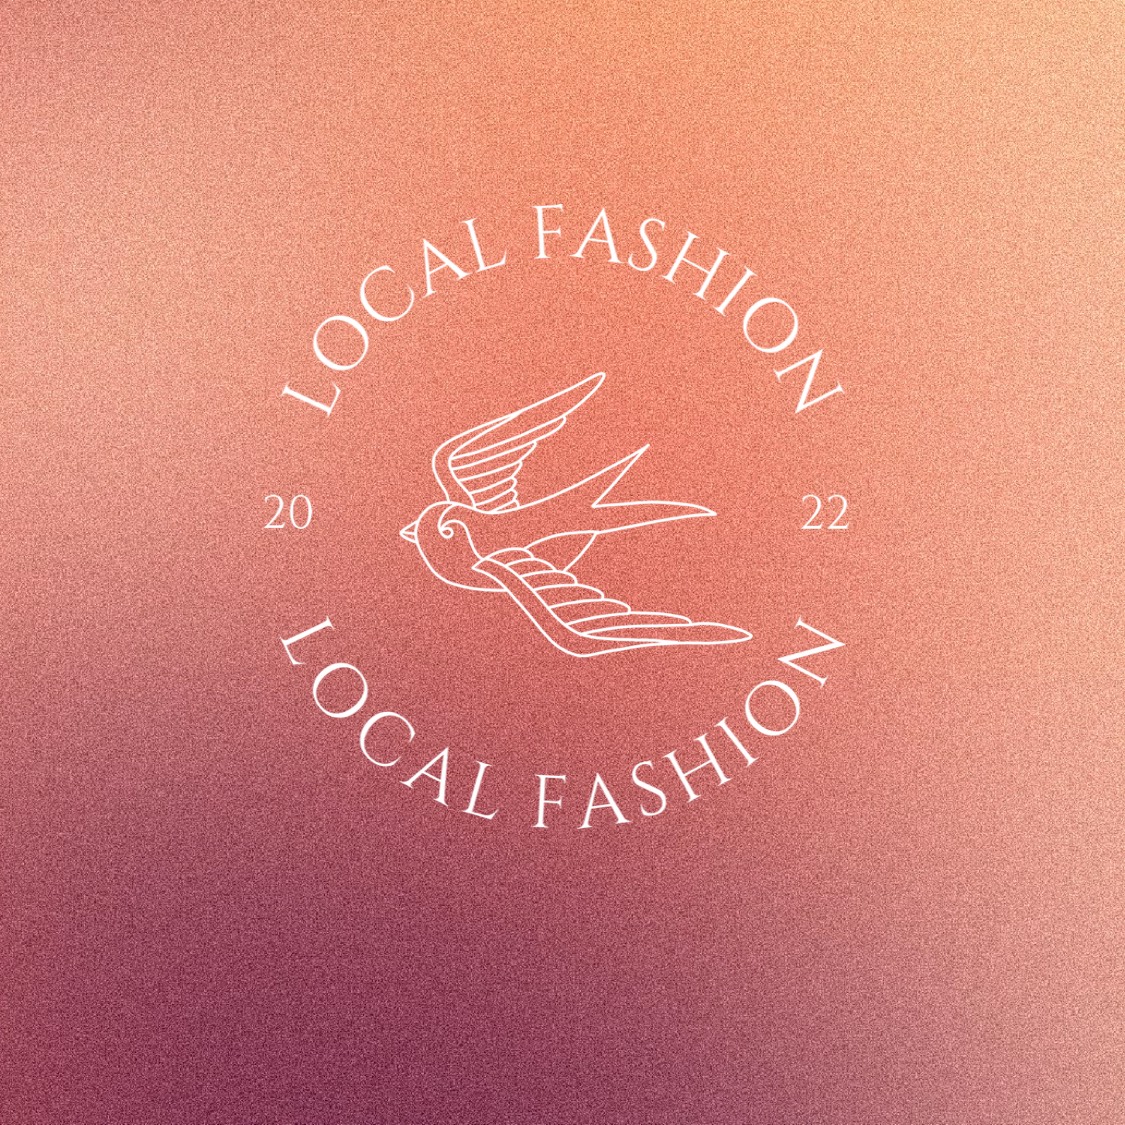 Bird illustration local fashion business logo template